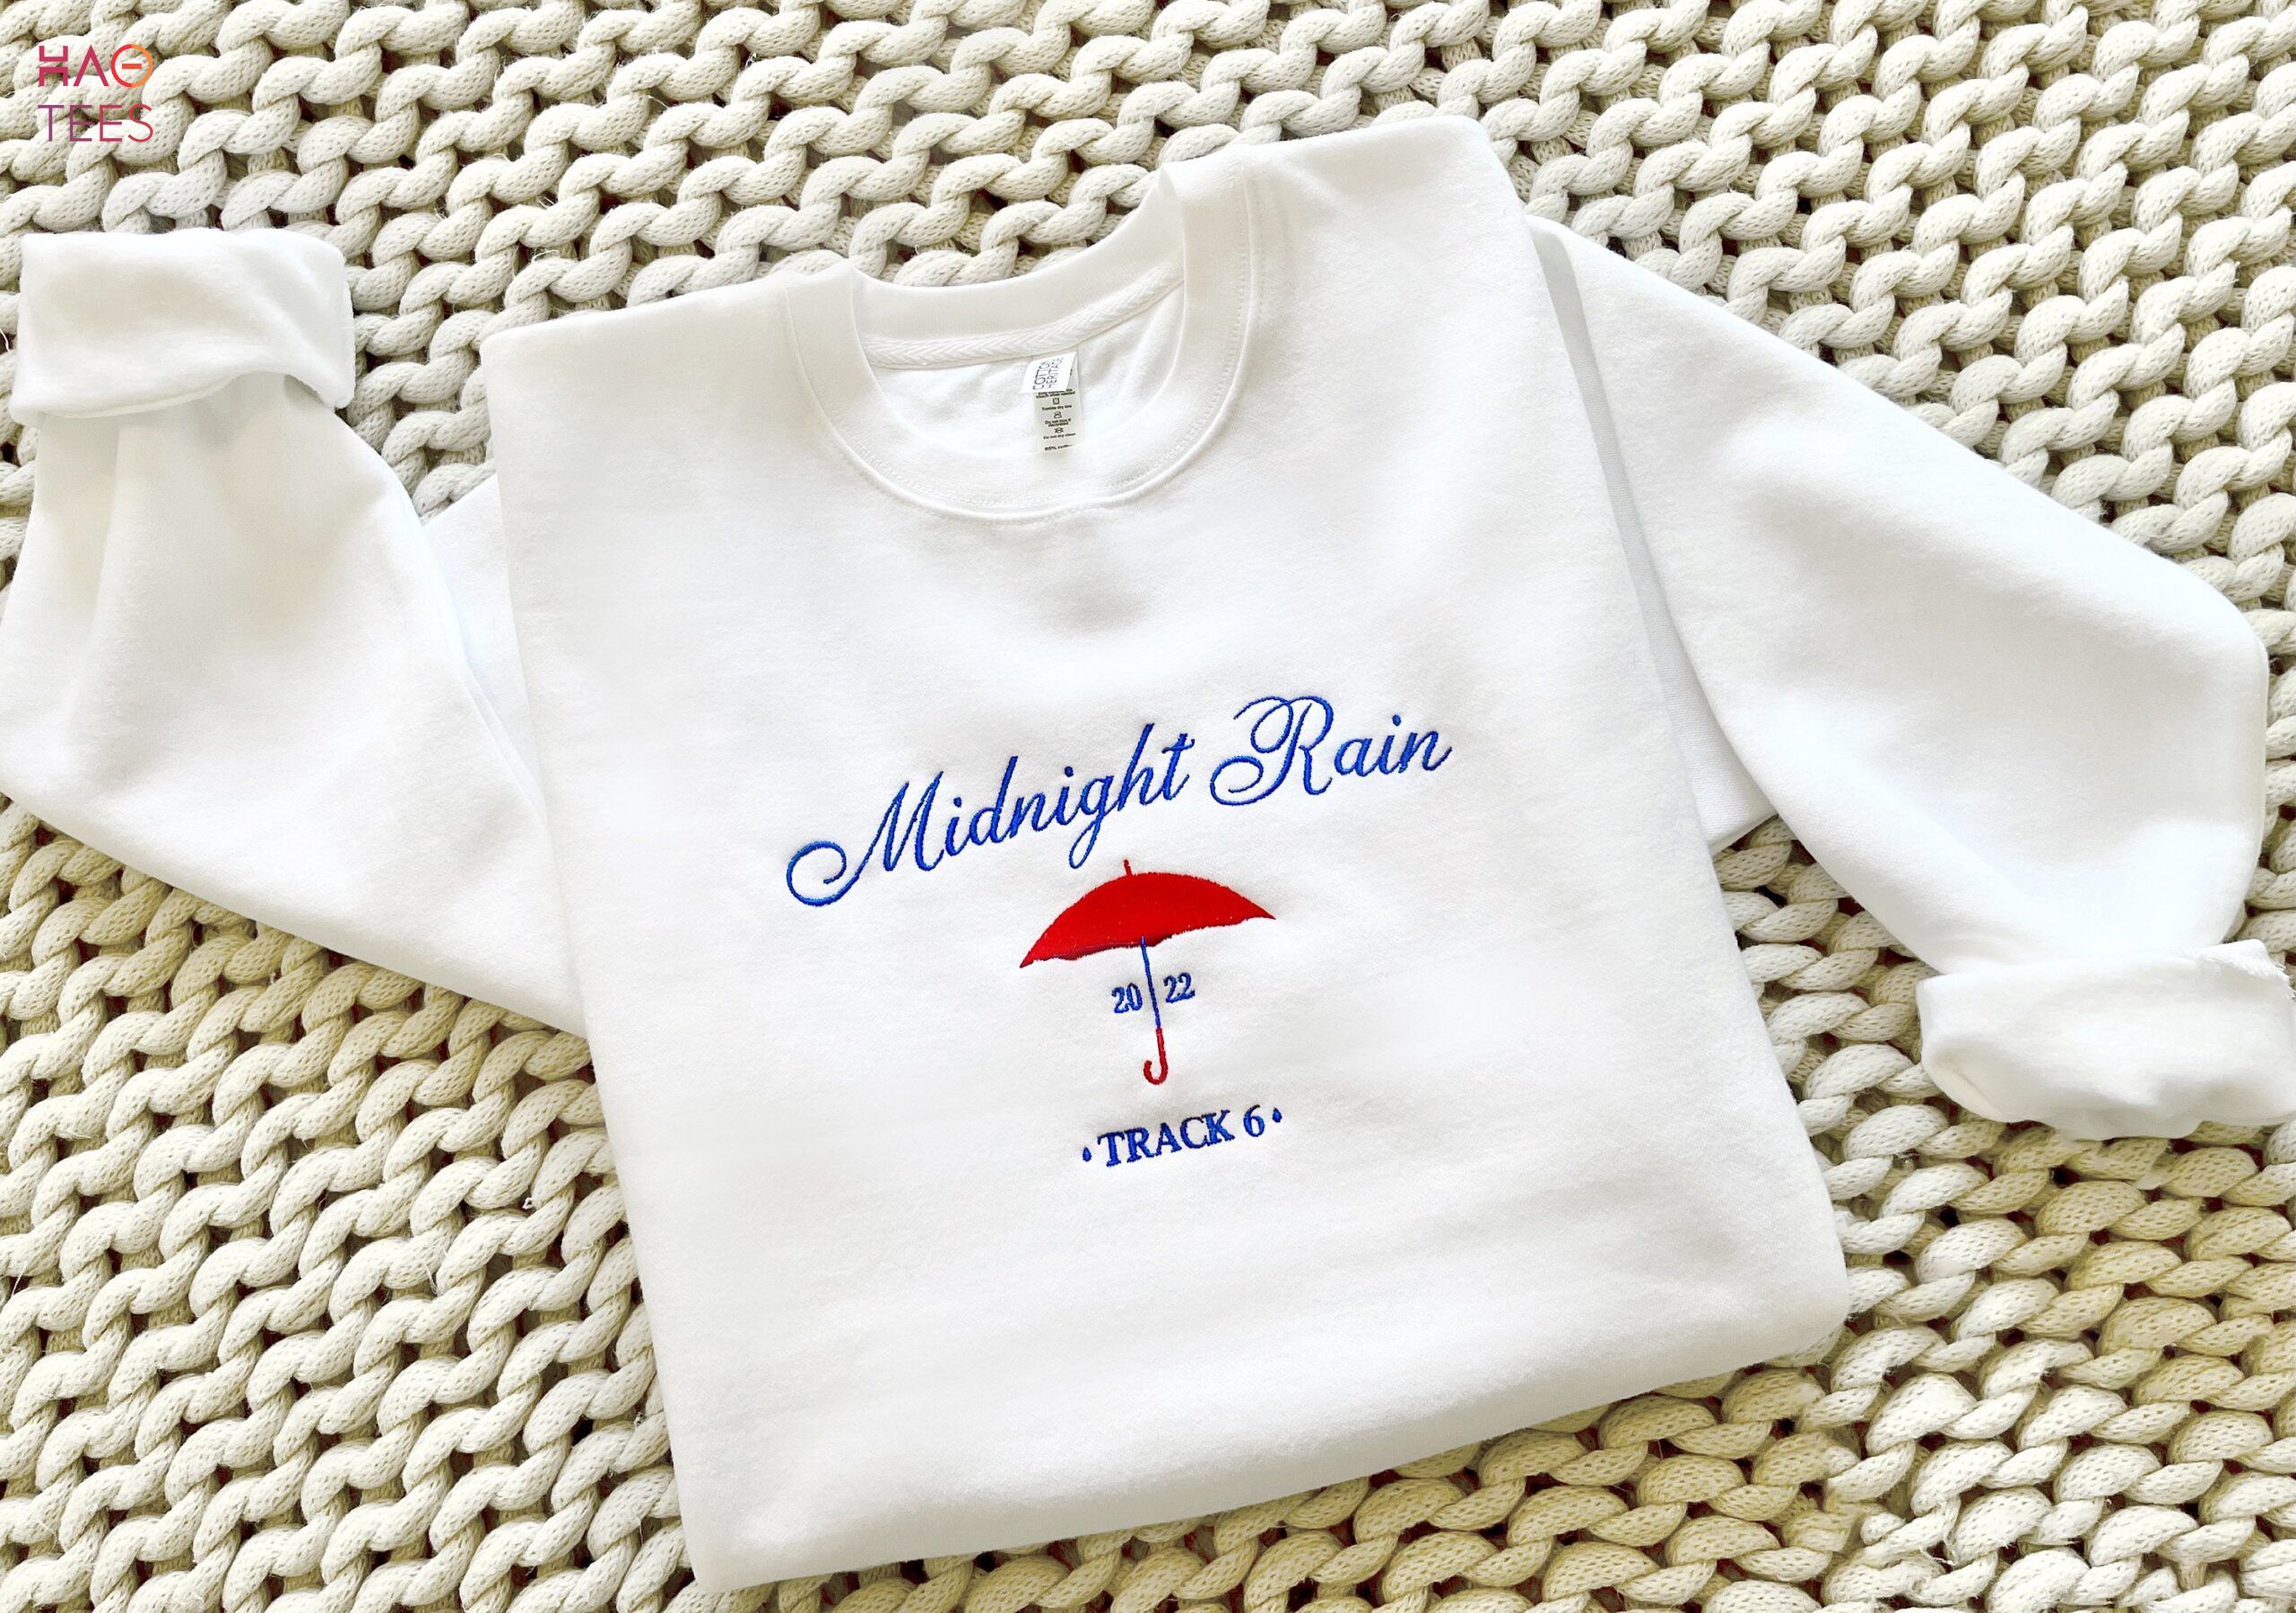 Embroidered Midnights Swift Midnight Rain Crewneck Midnights Album Midnight Rain Song Taylor Fan Gift Shirt